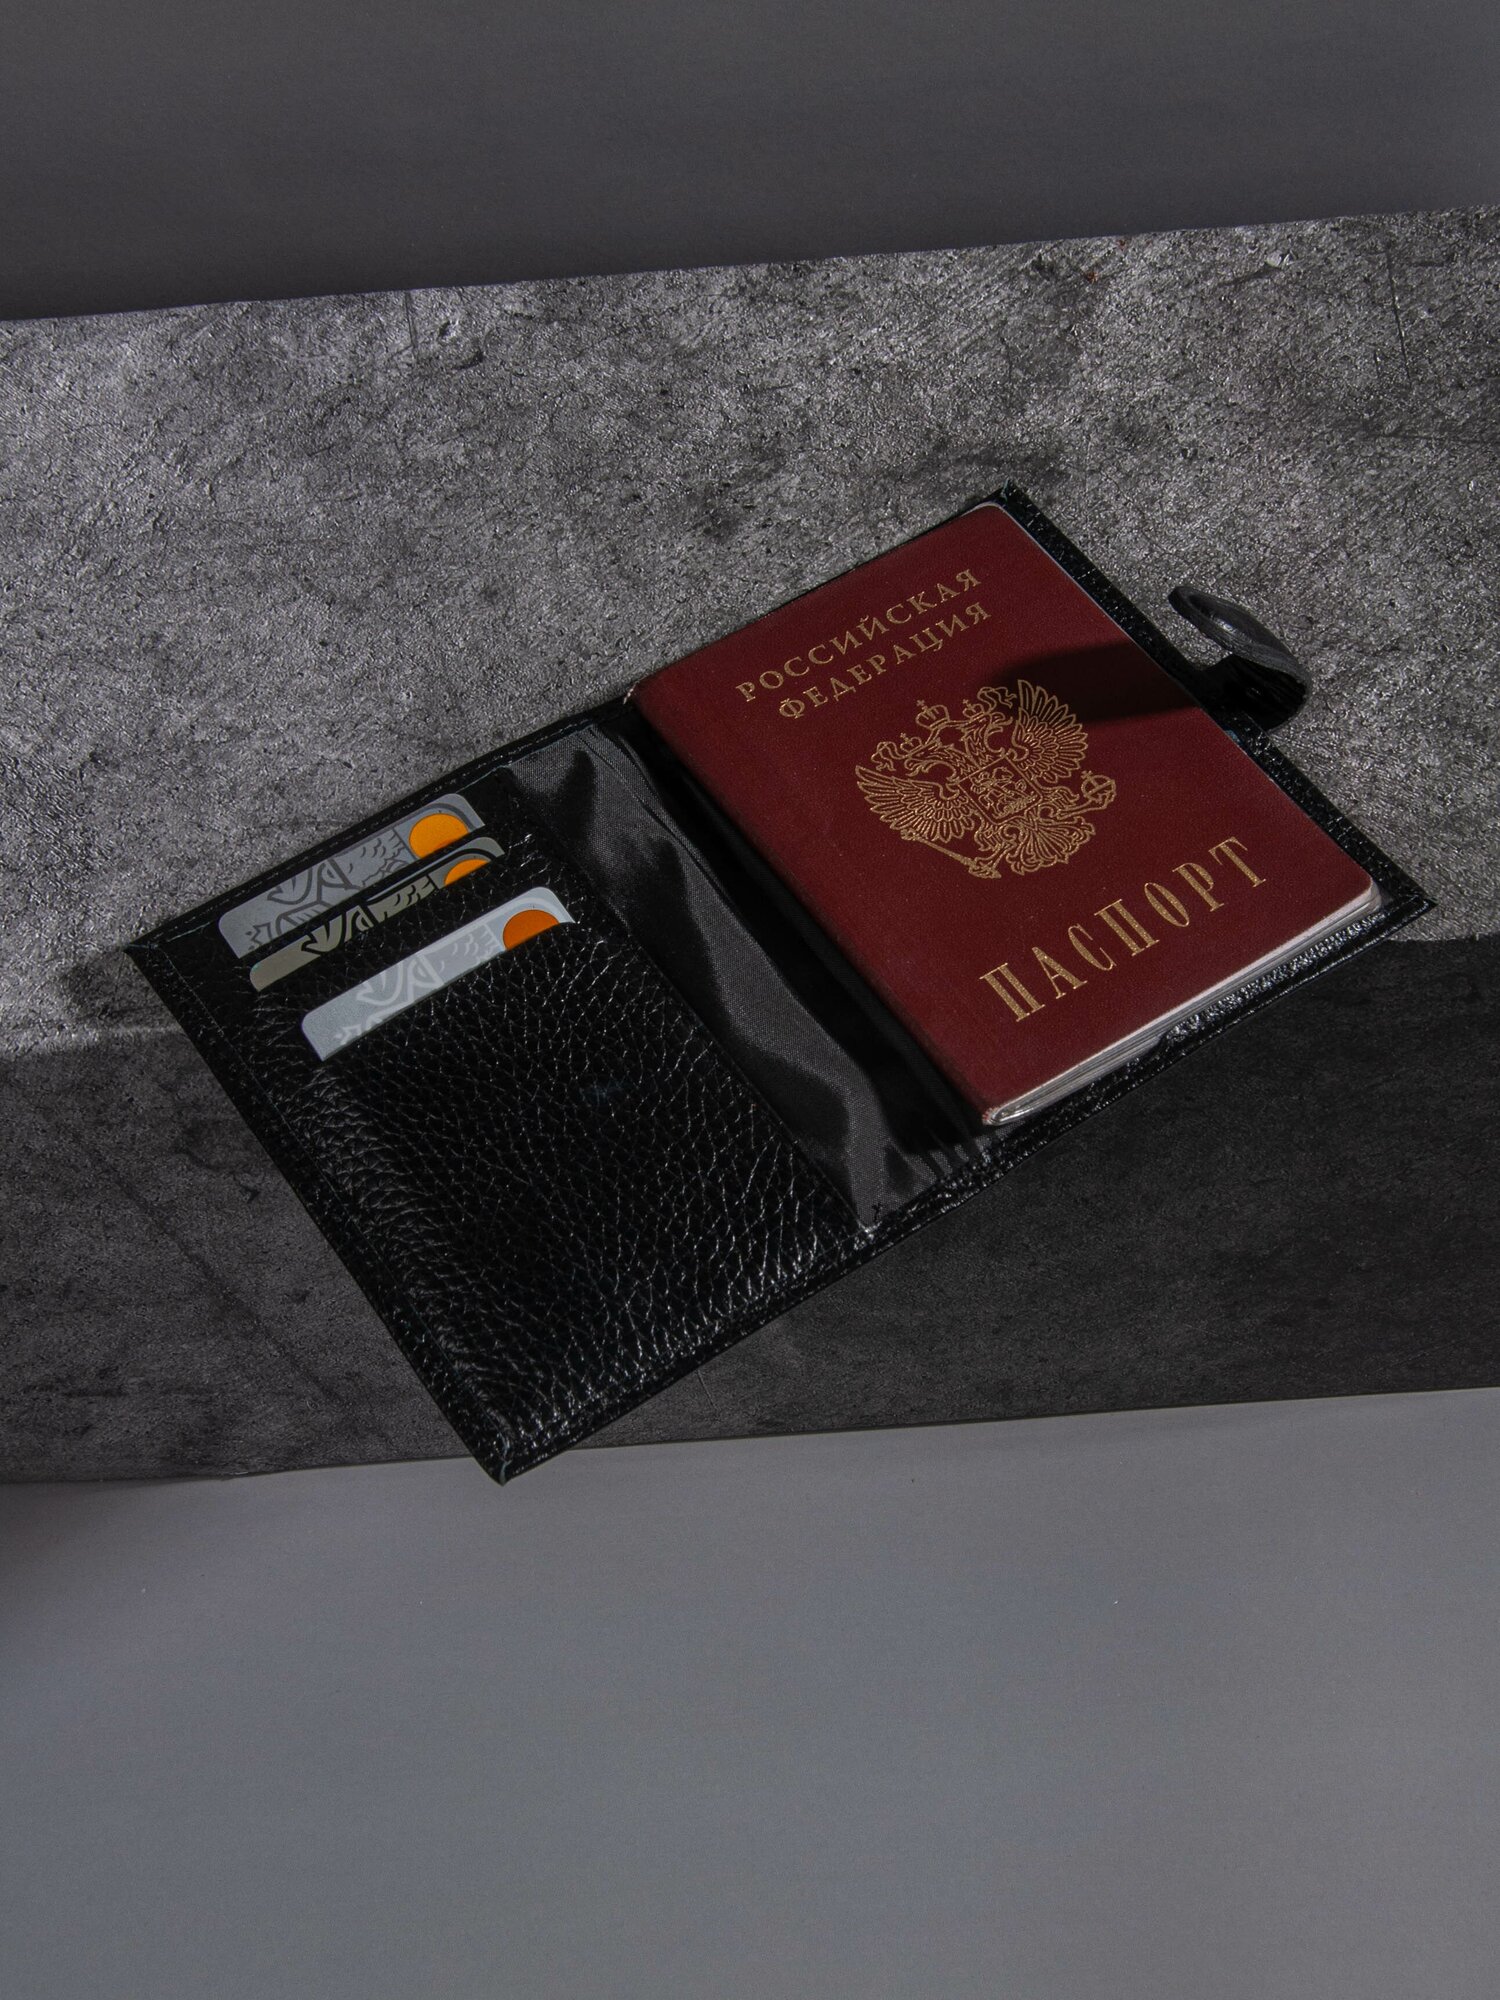 WEYAL / Обложка на паспорт / Обложка для паспорта из натуральной кожи / чехол для паспорта с гербом